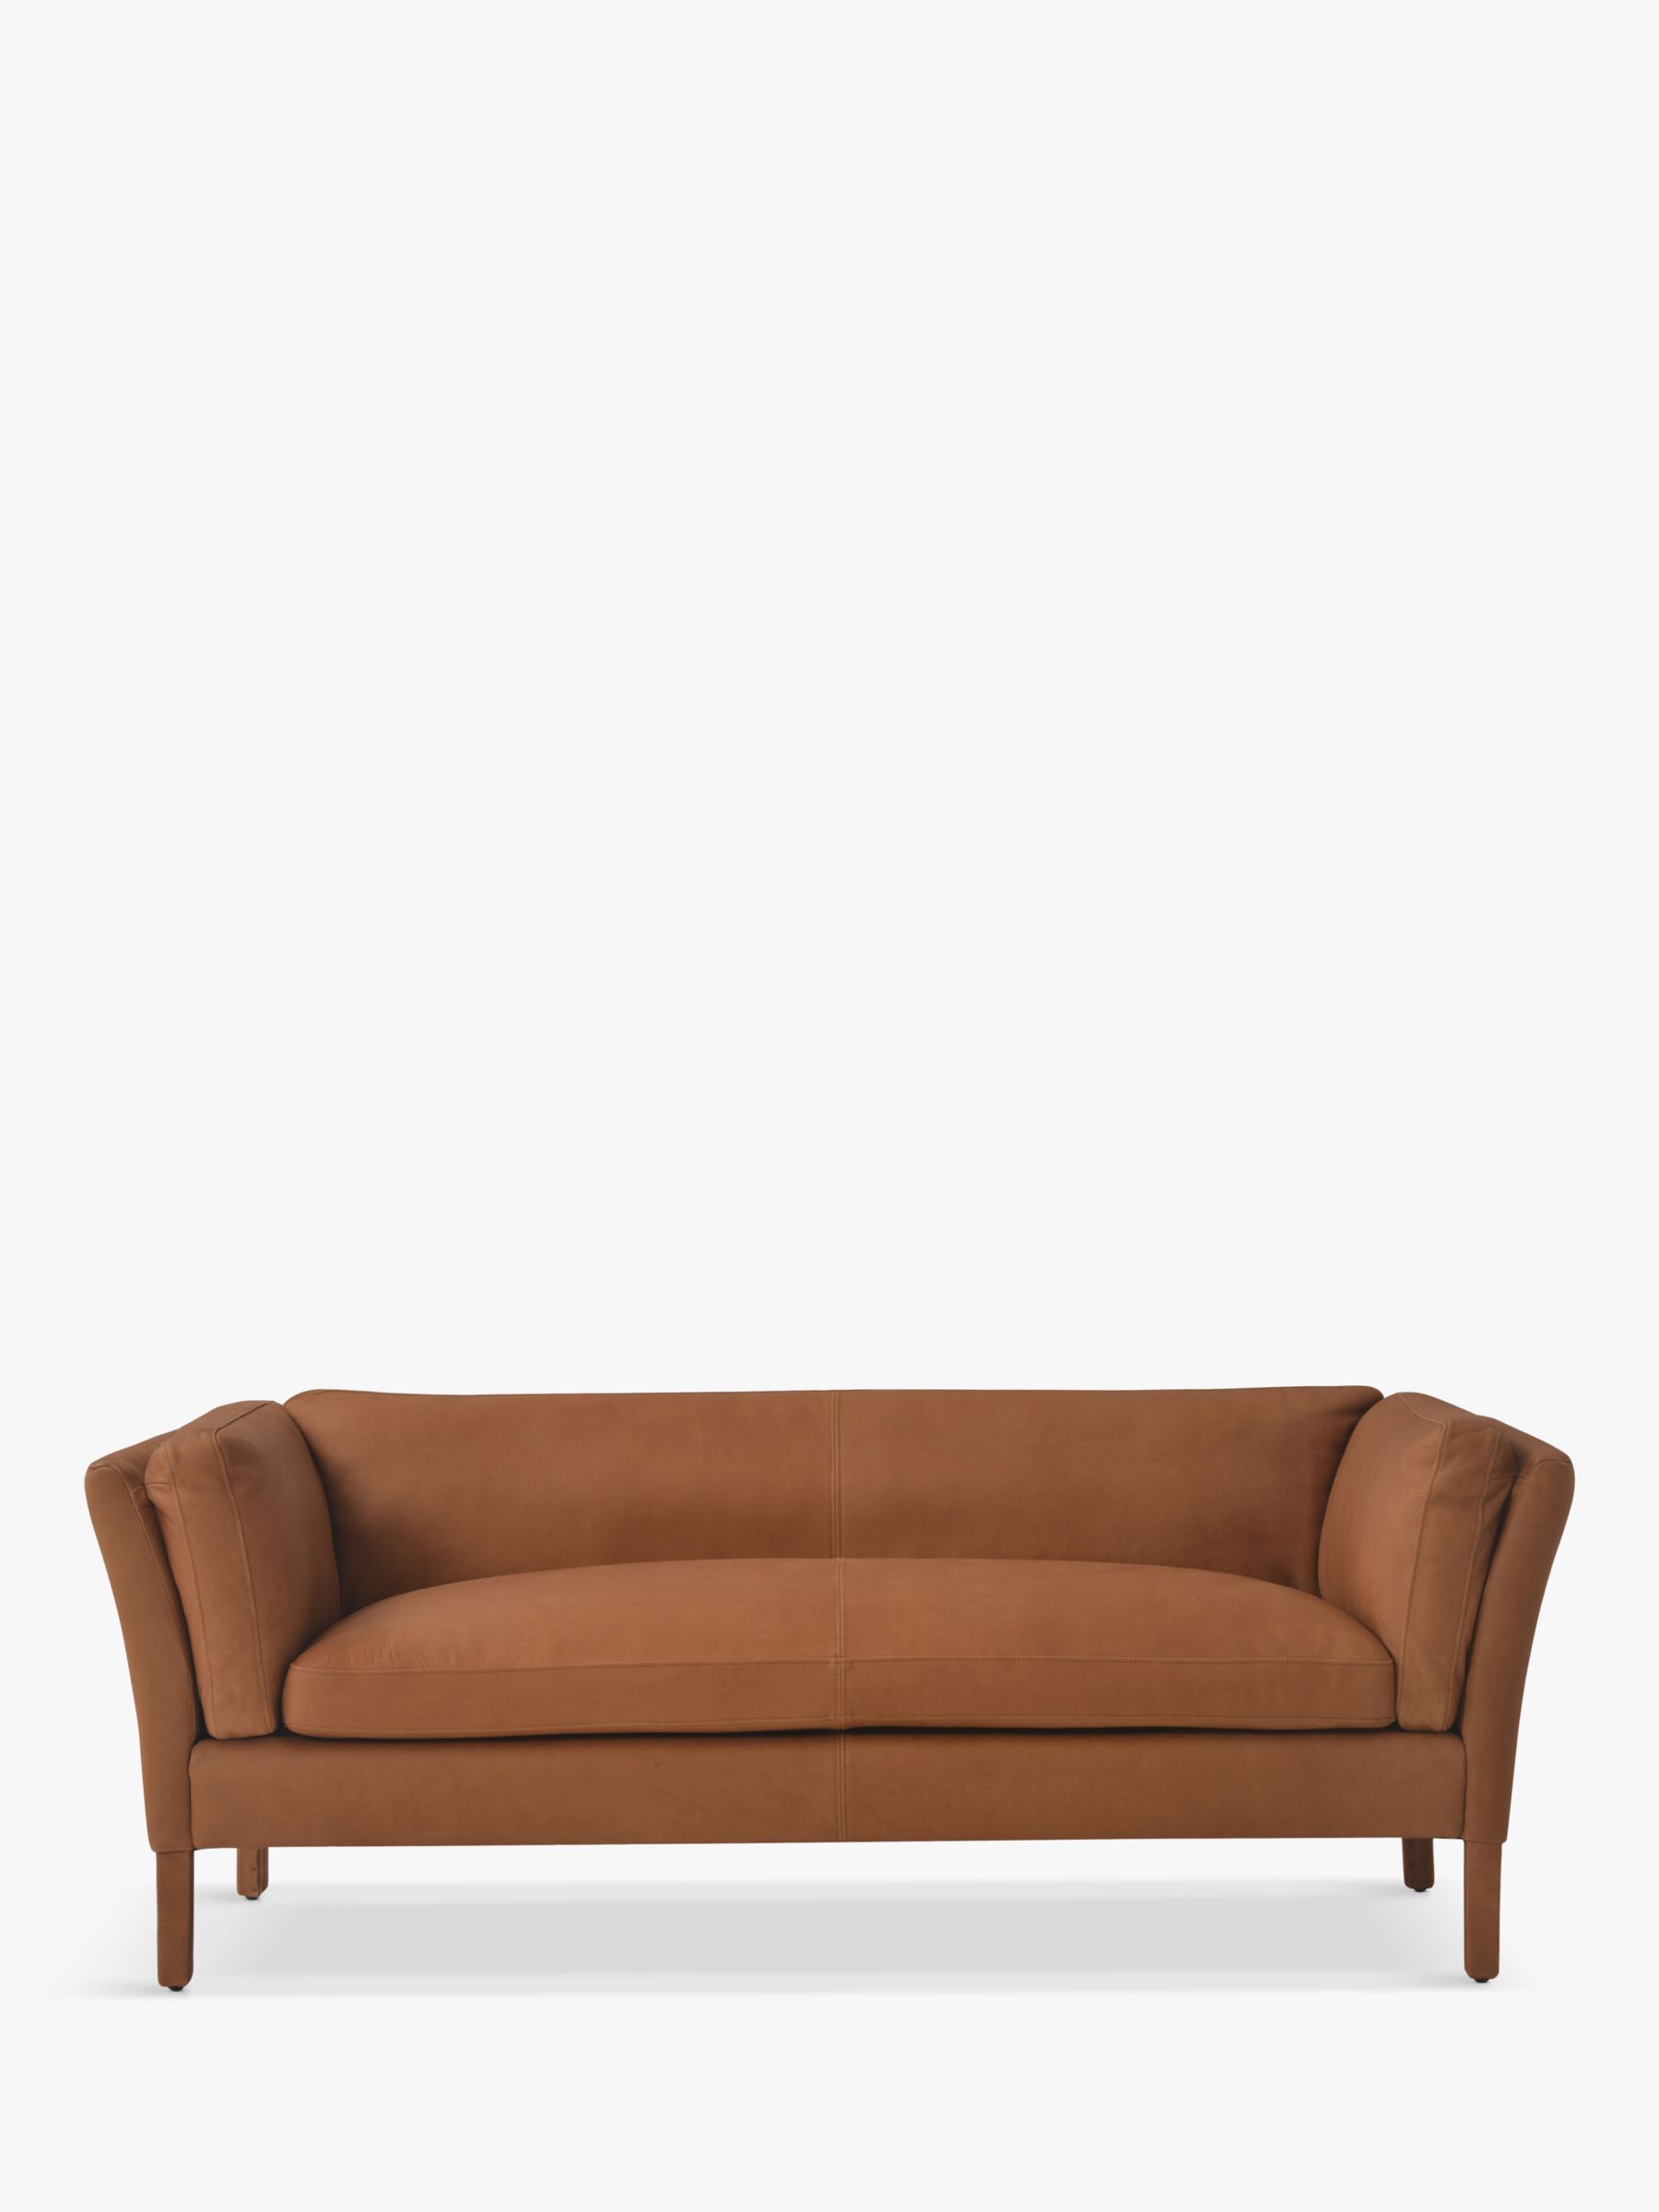 Photo of Halo groucho medium 2 seater leather sofa